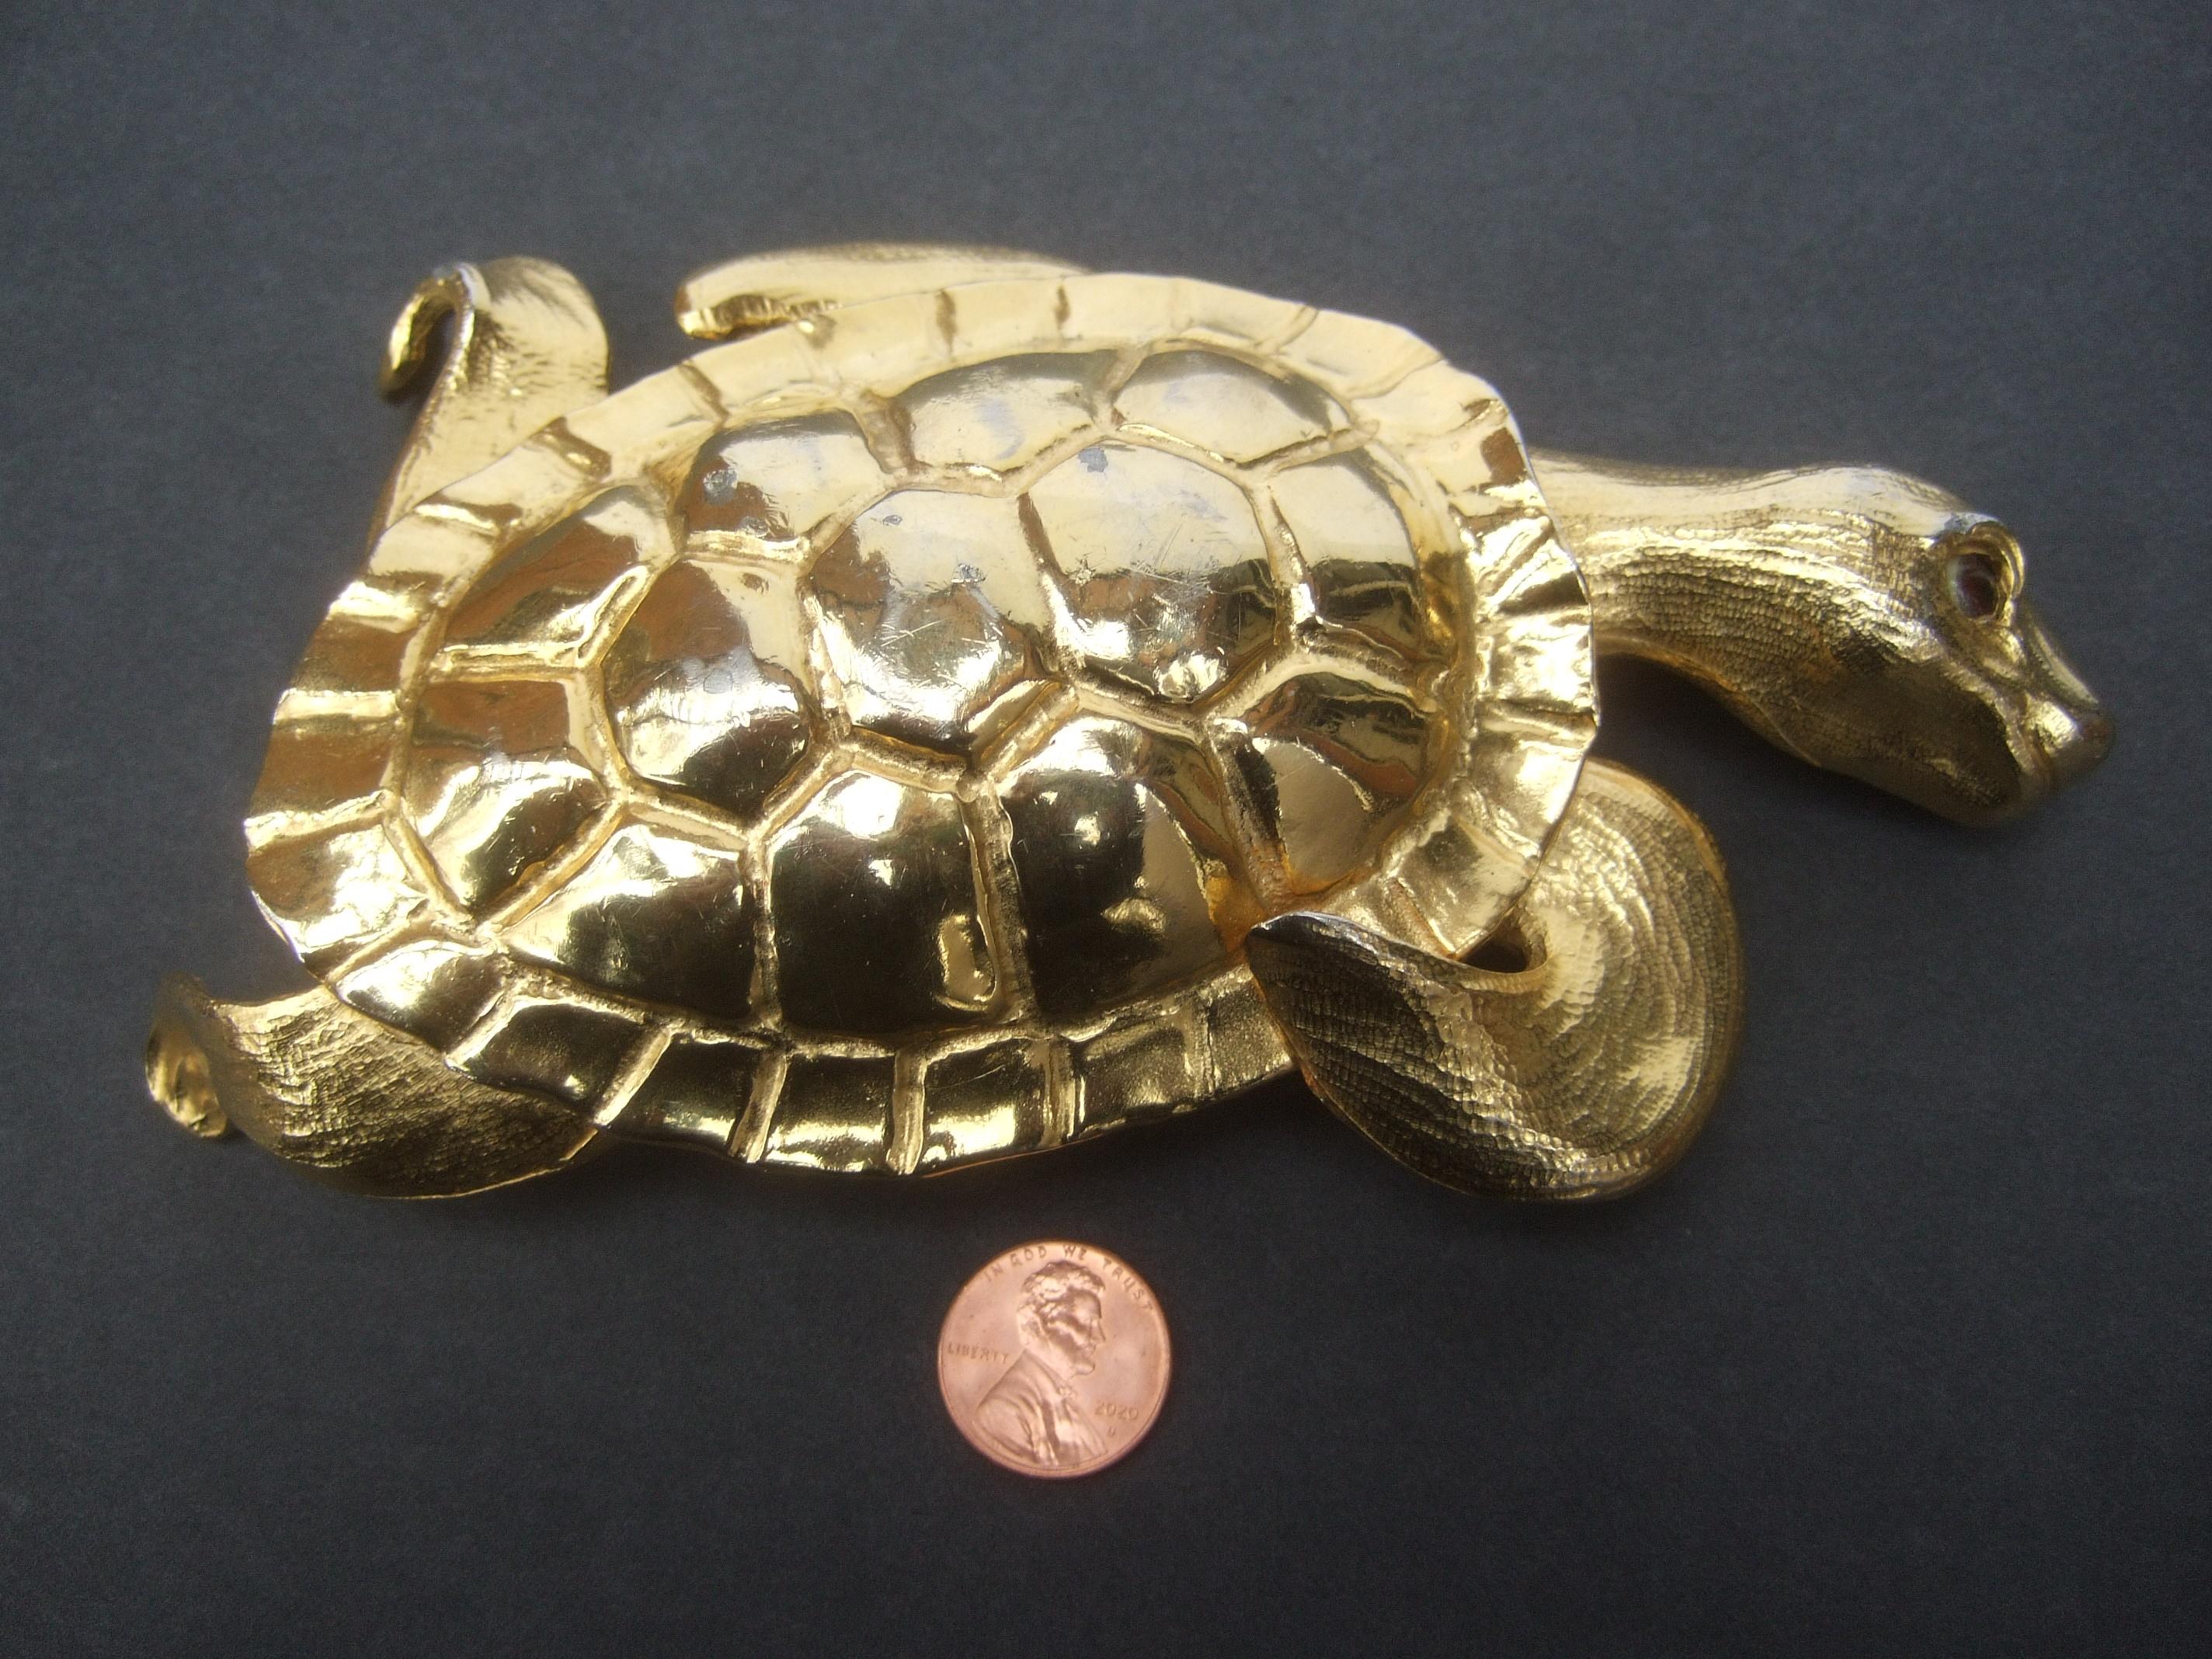 Christopher Ross Massive Huge Scale 24k Gold Plated Turtle Belt Buckle c 1980s 1